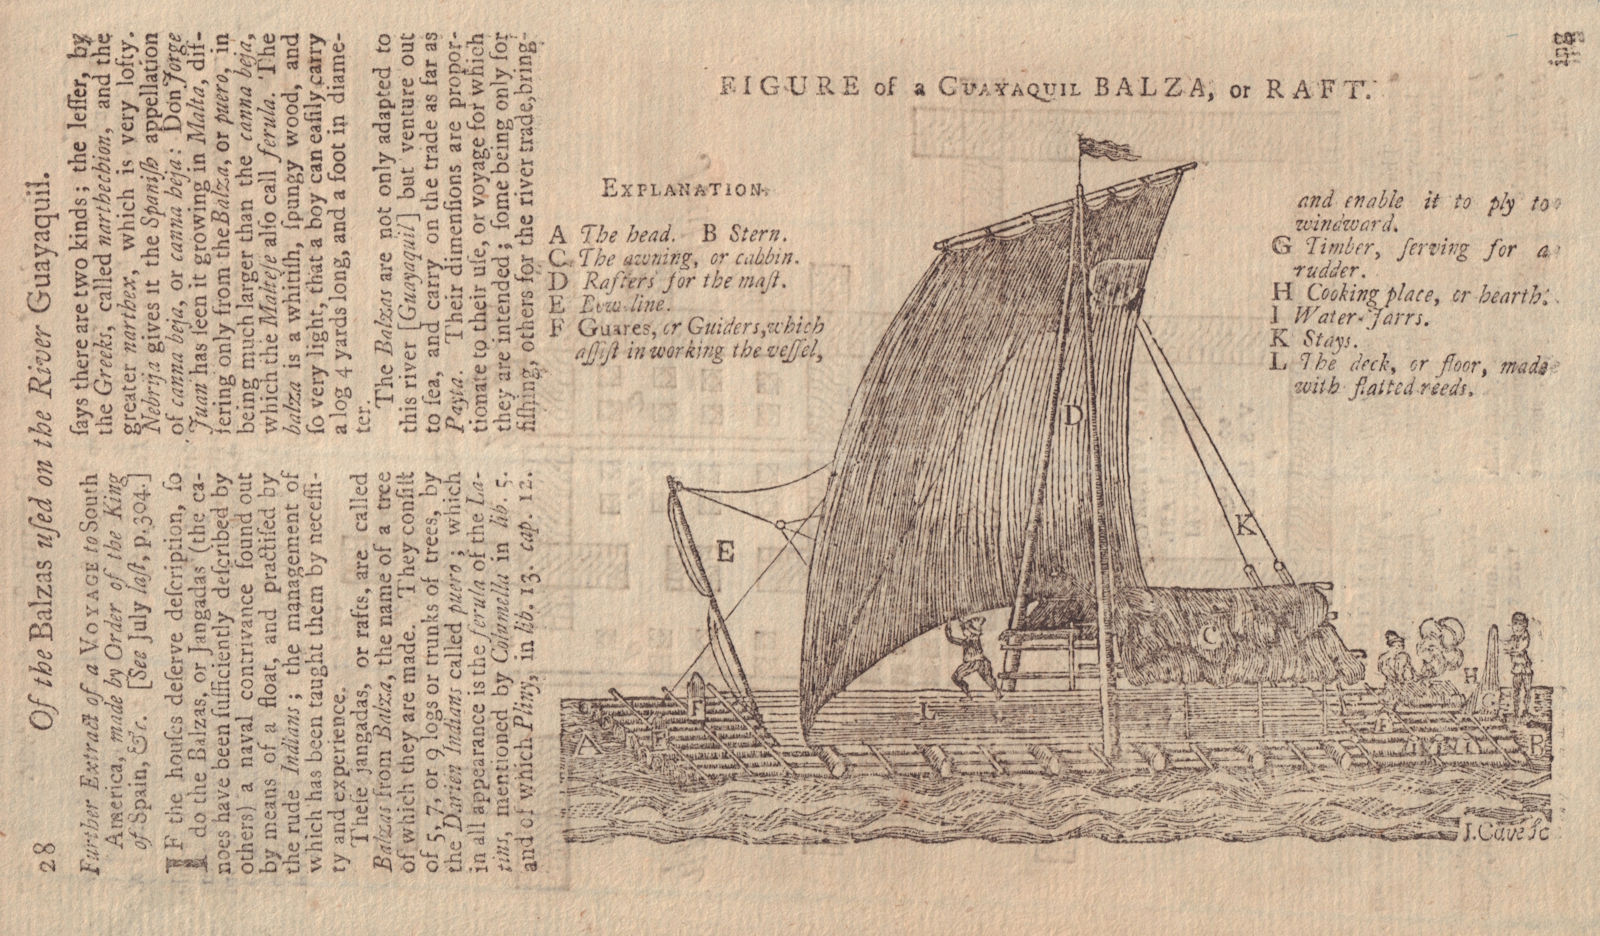 A Guayaquil Balza or Raft in South America. Ecuador. Pre-Columbian Balsa 1750